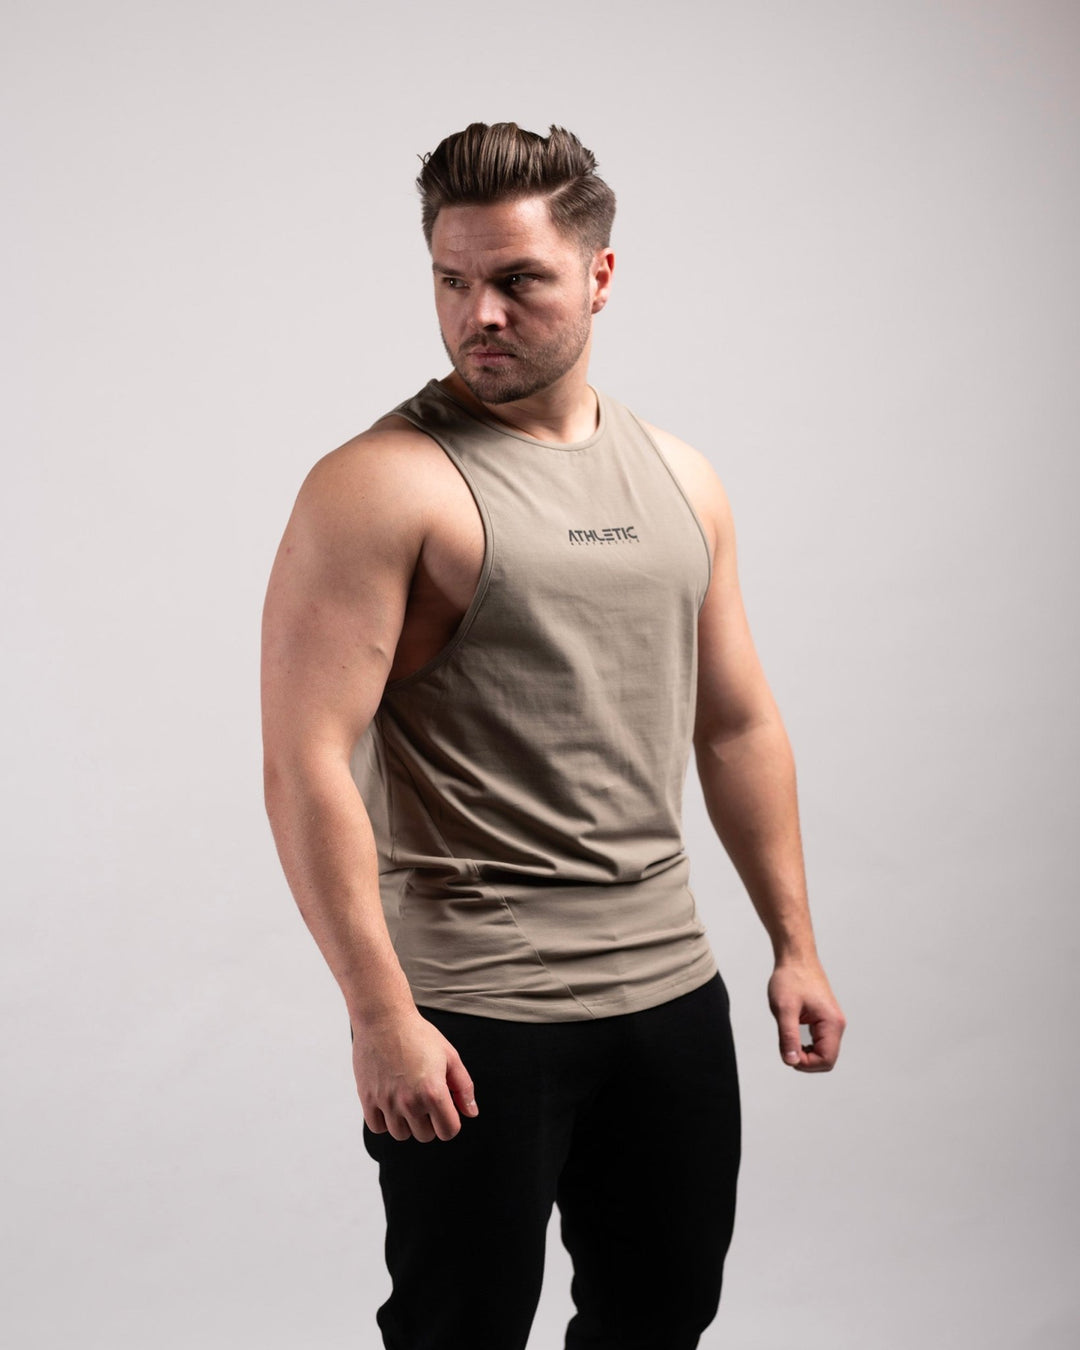 Infinity Sleeveless Shirt (Military) - Athletic Aesthetics